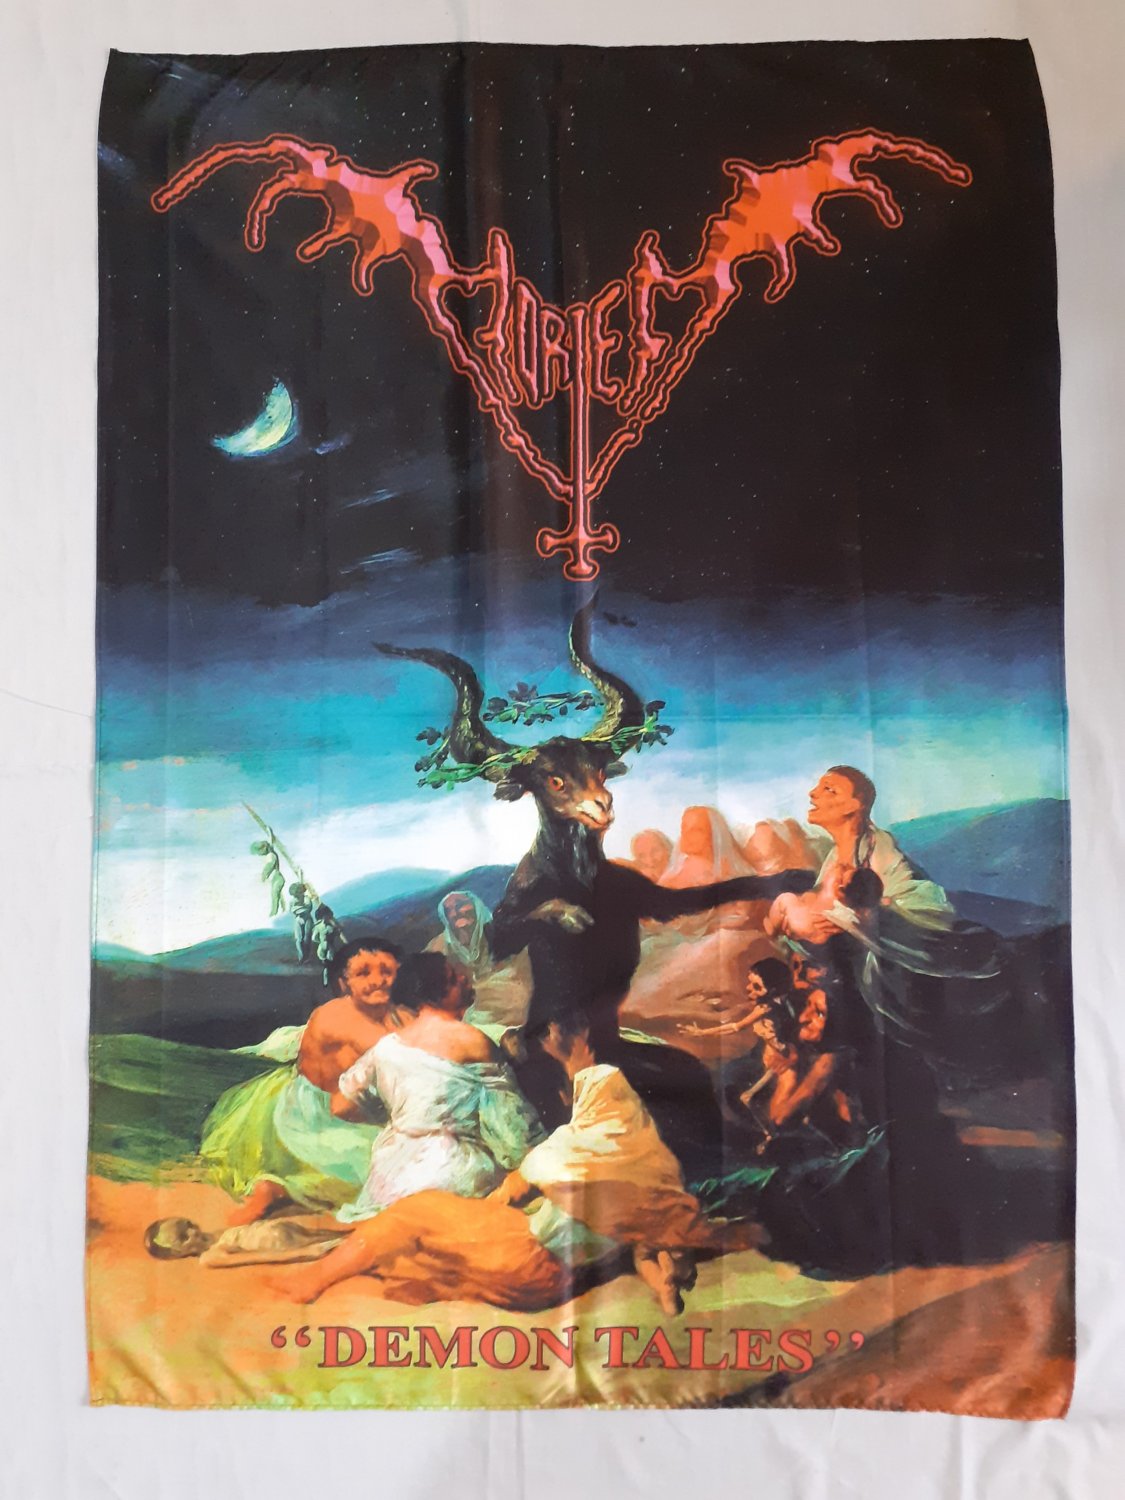 MORTEM - Demon Tales FLAG cloth POSTER Banner peruvian Death METAL Inquisition